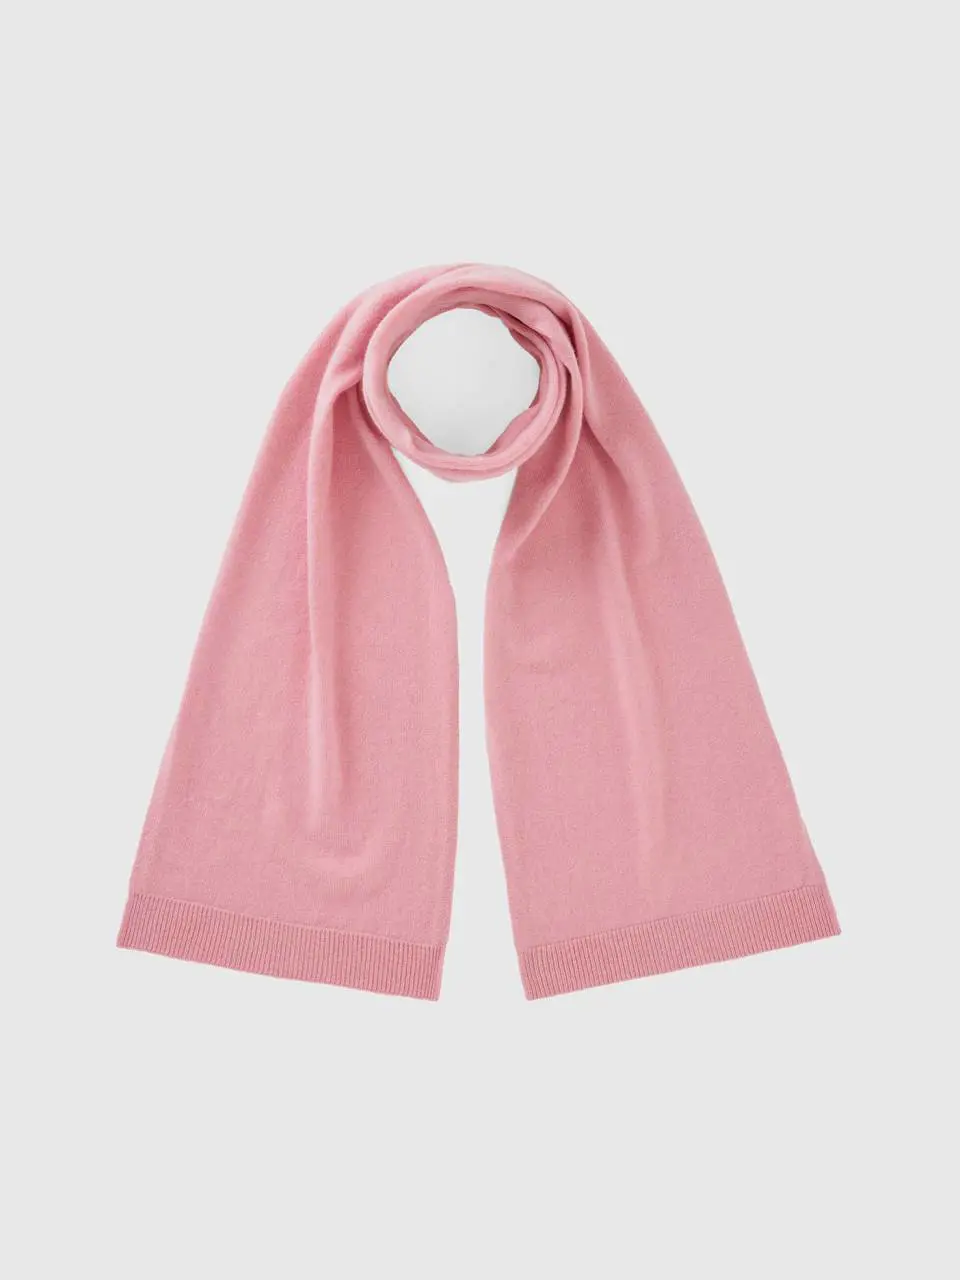 Benetton pure cashmere scarf. 1